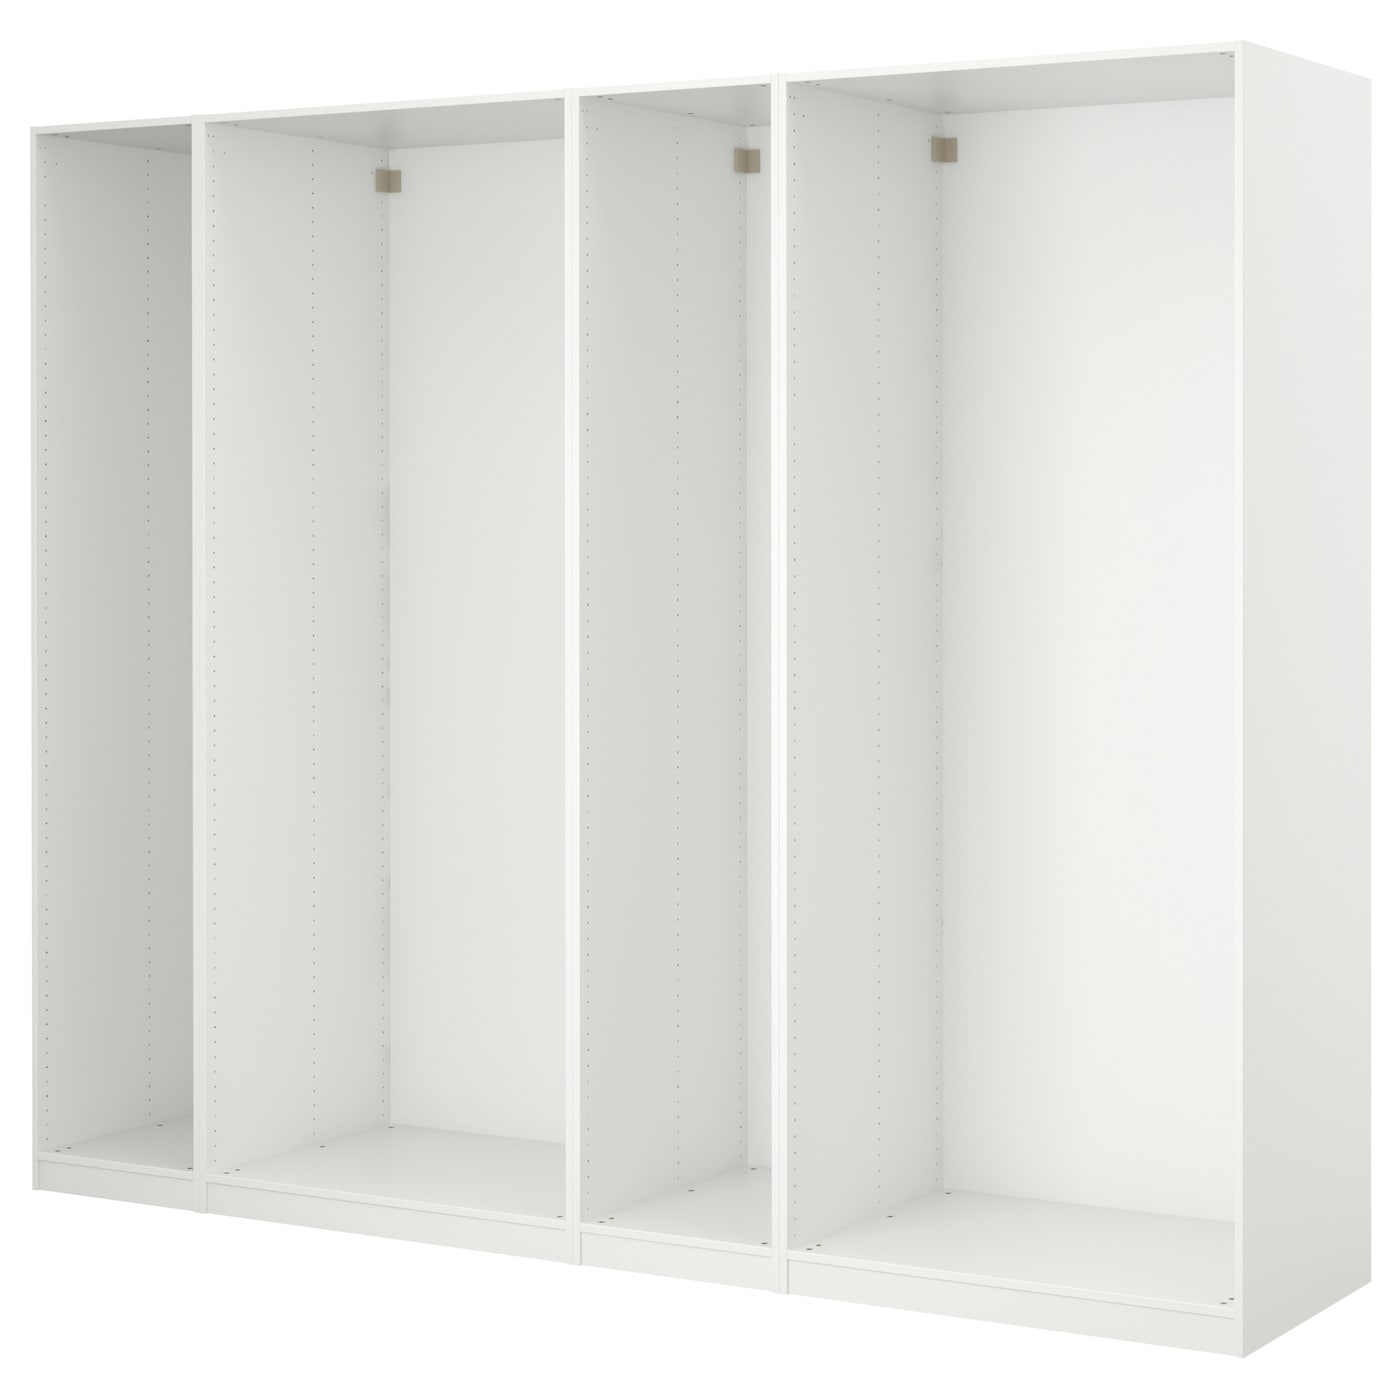 Каркас гардероба - IKEA PAX, 300x58x236 см, белый ПАКС ИКЕА